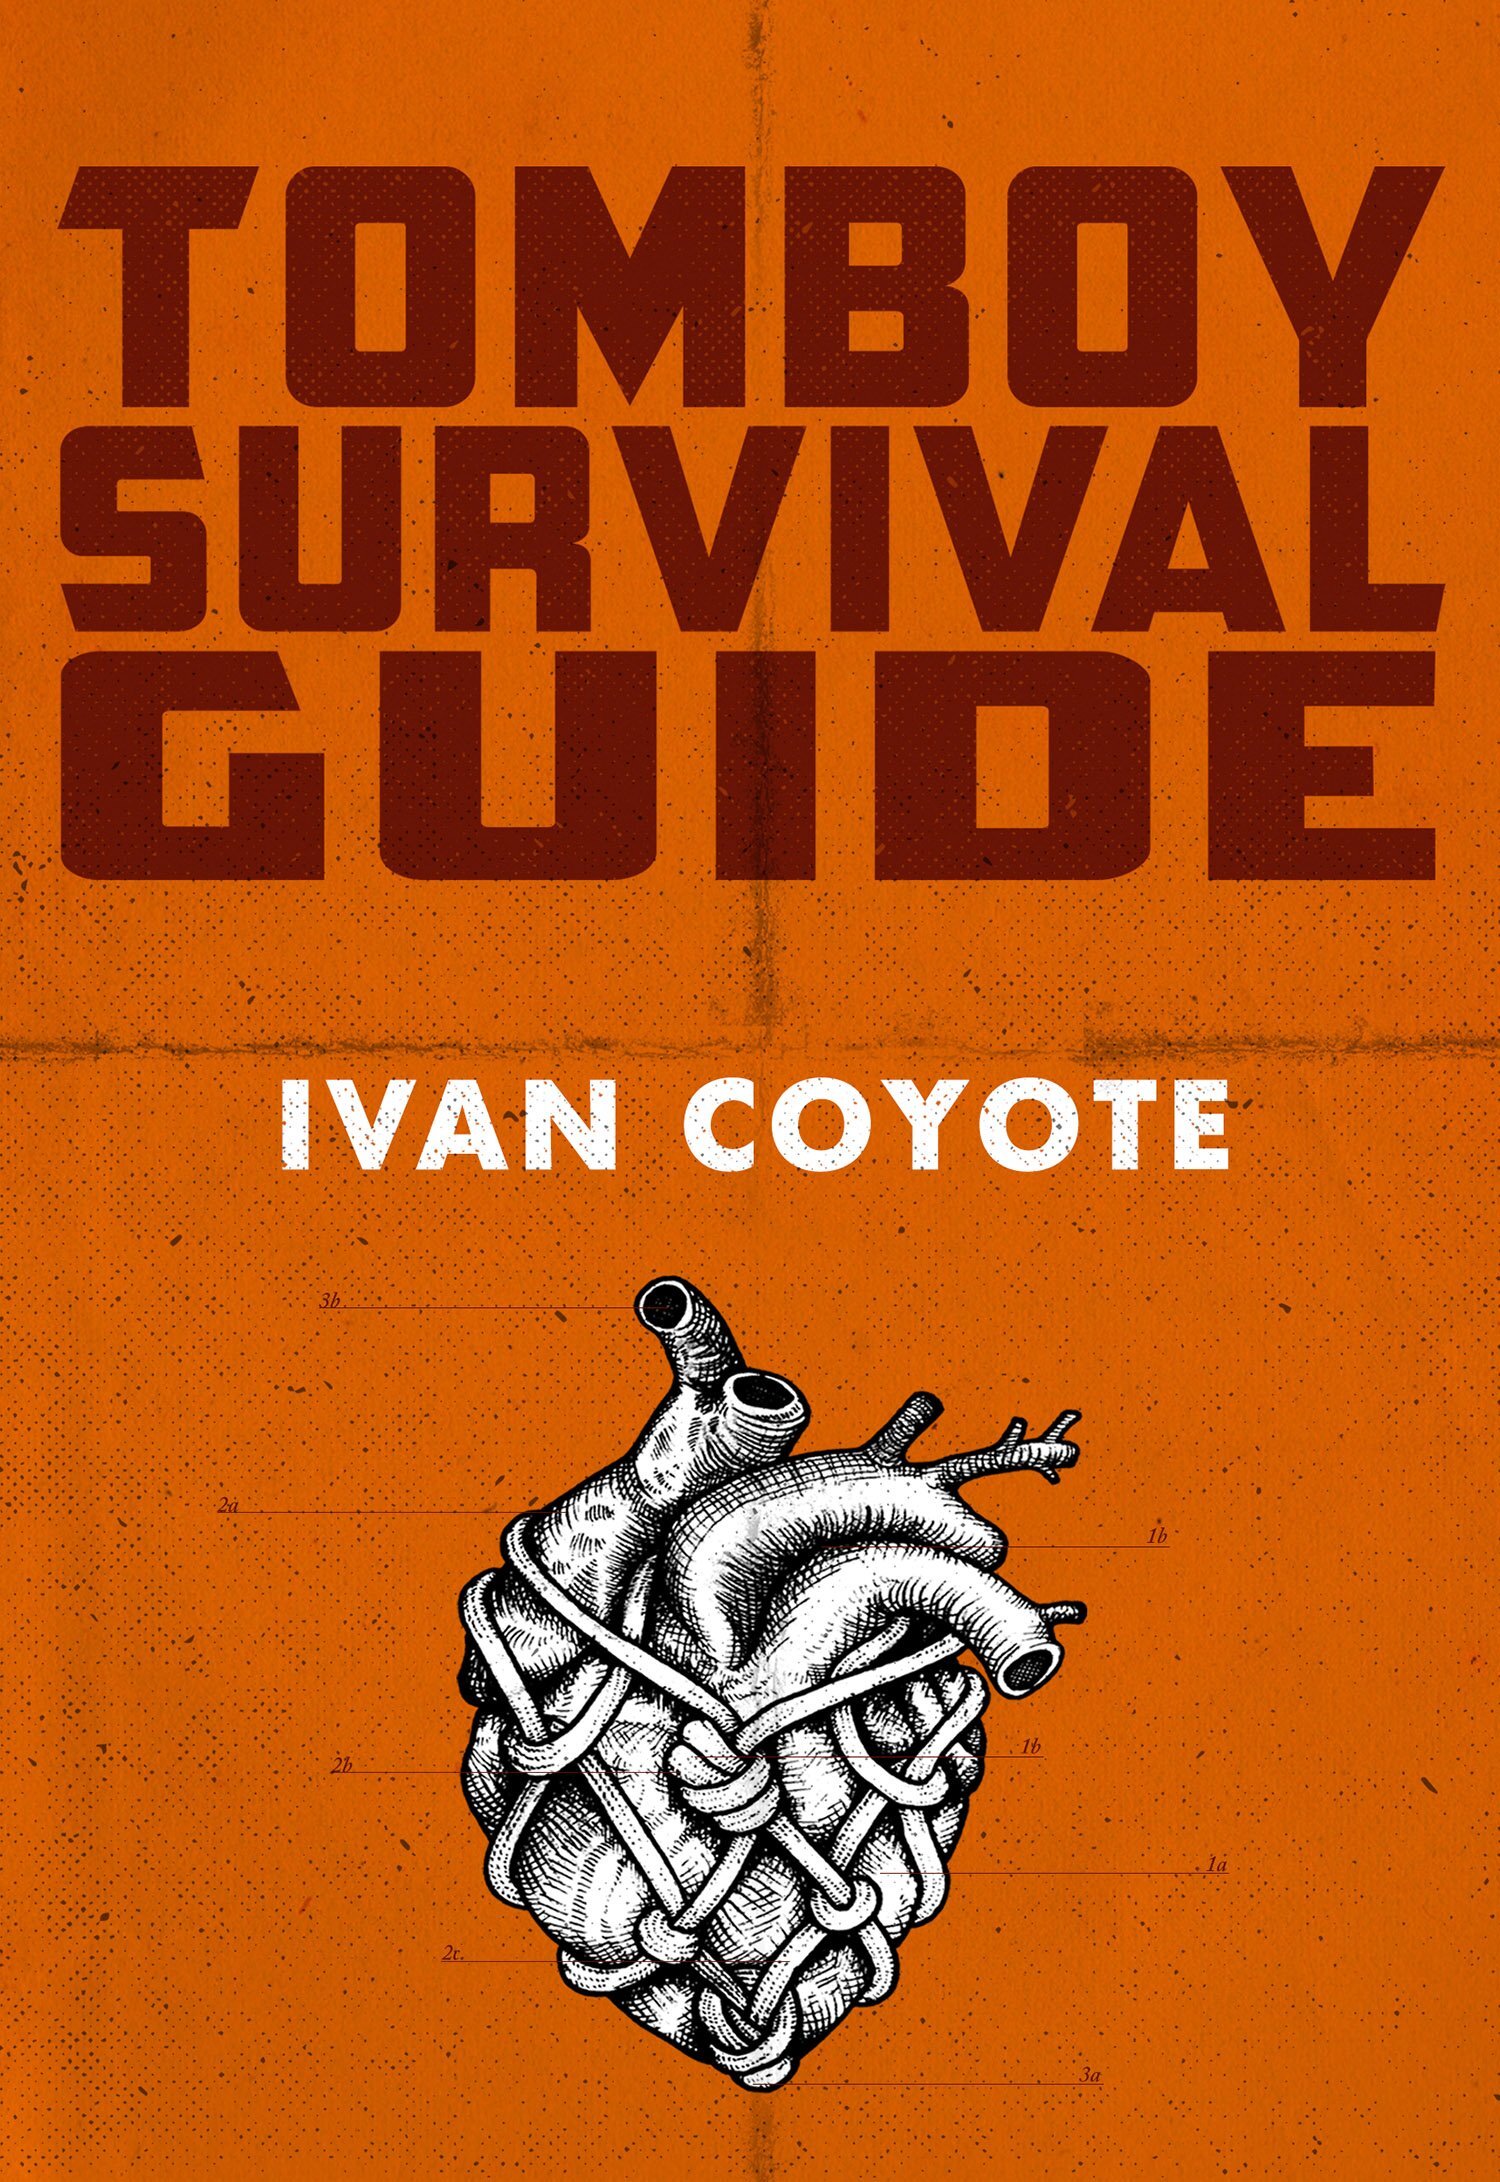 Tomboy Survival Guide by Ivan Coyote.jpg